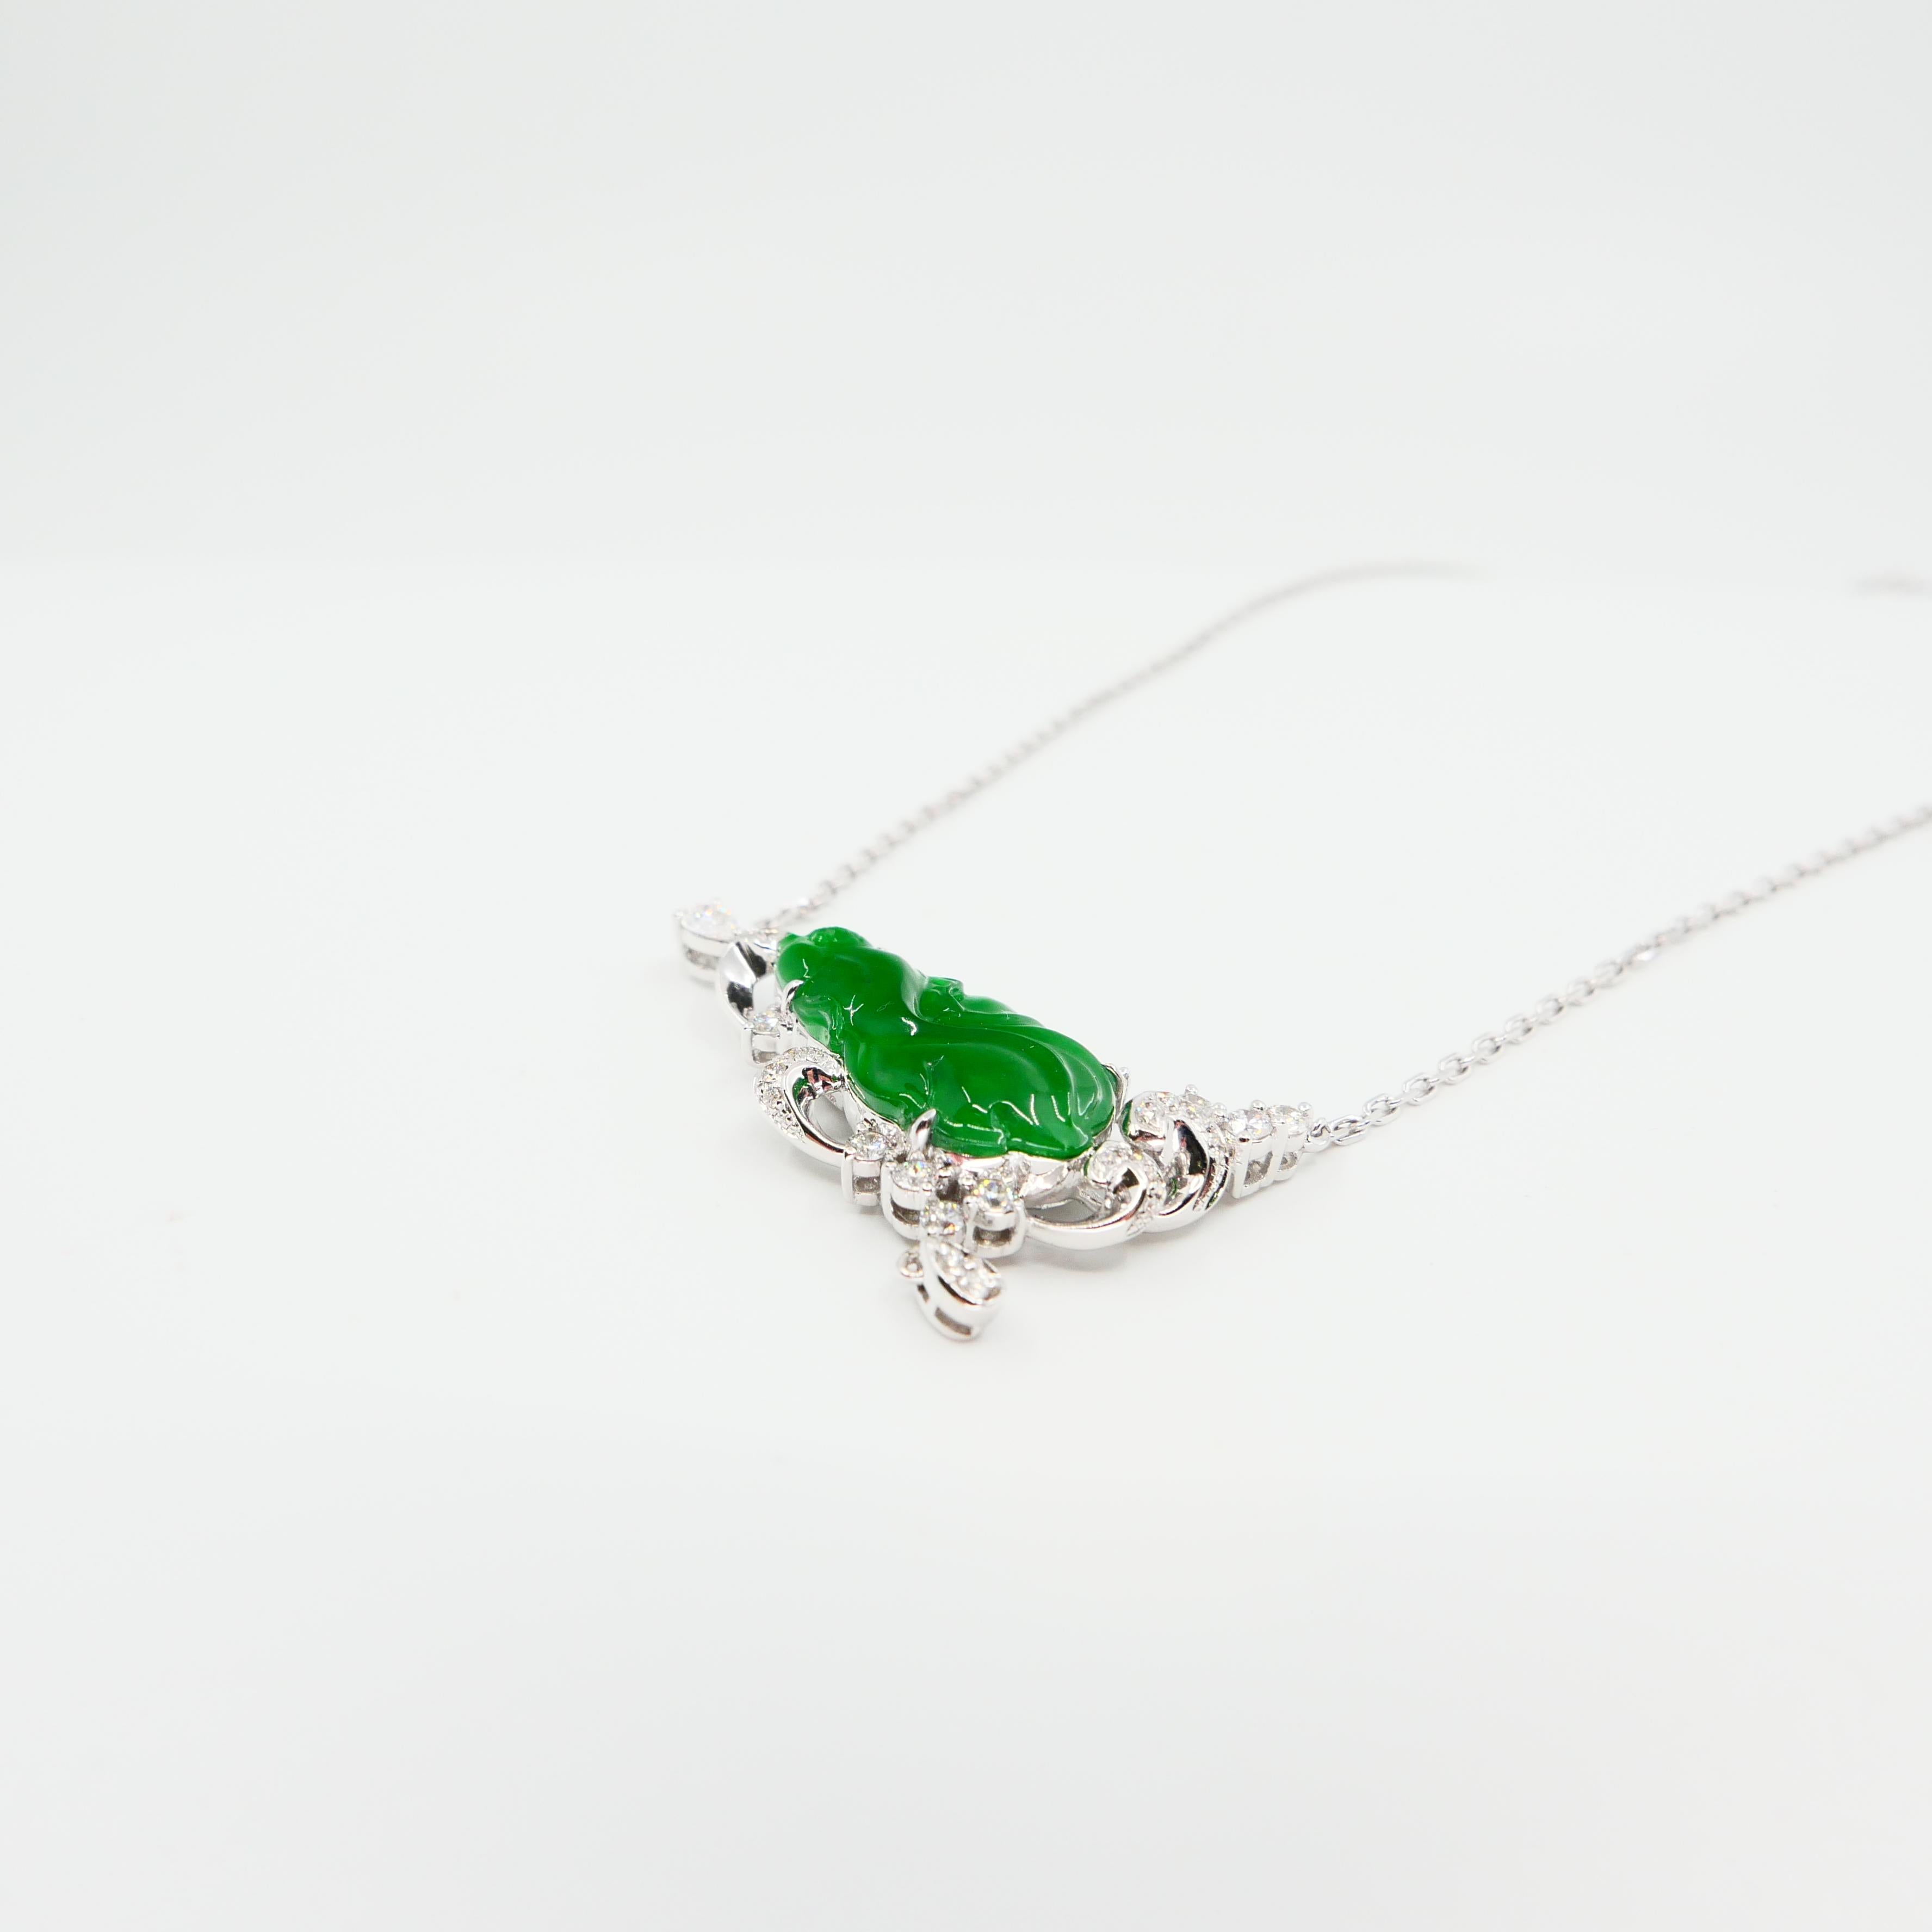 Certified Type A Jadeite Jade Diamond Pendant Drop Necklace, Imperial Green For Sale 1